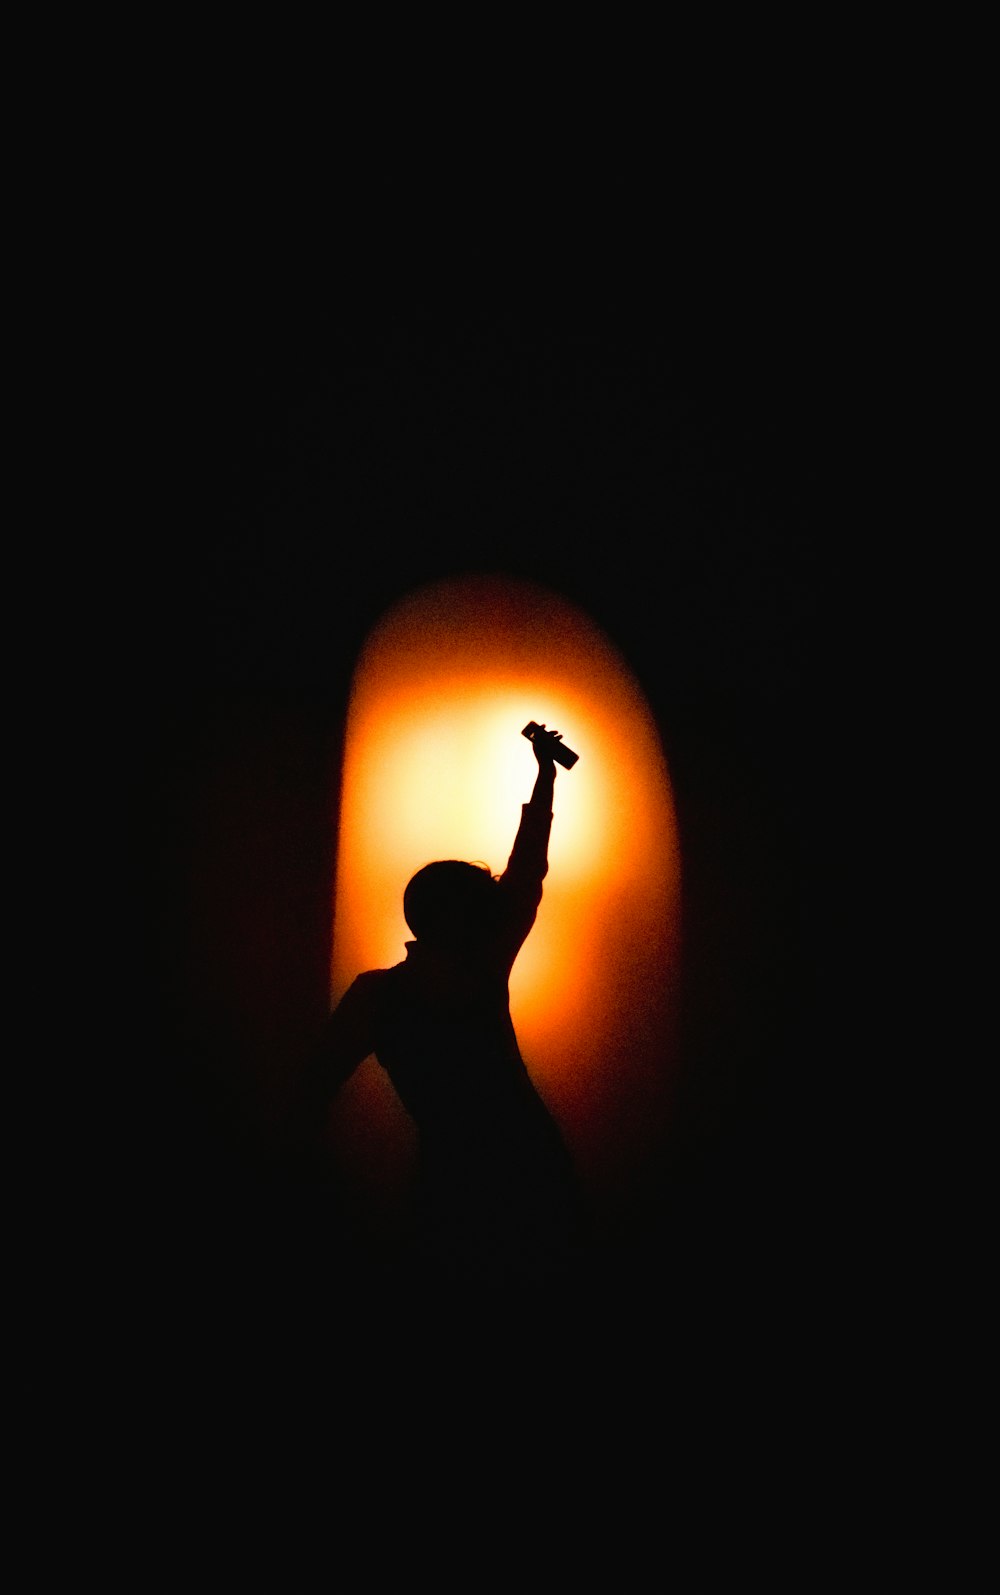 a silhouette of a person holding a giraffe in the dark